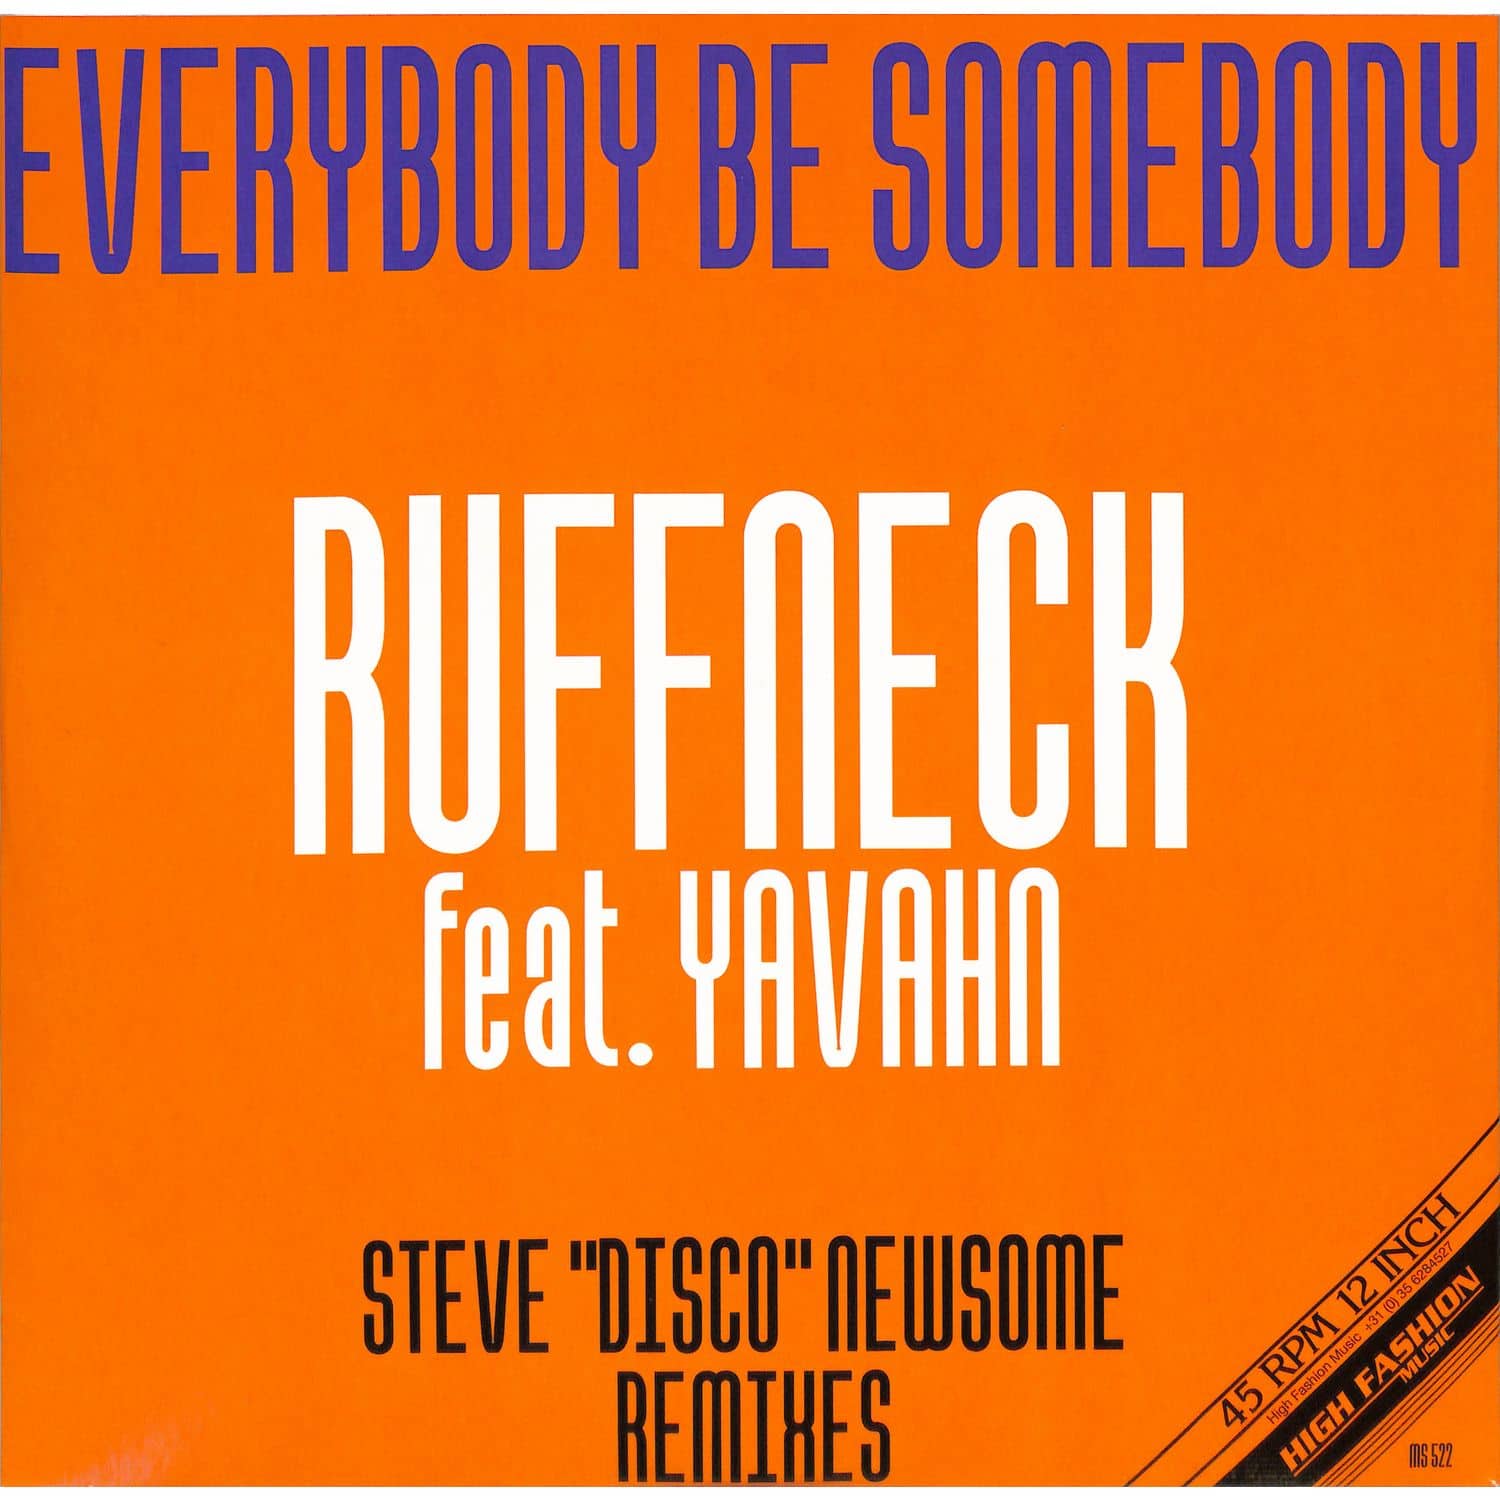 Ruffneck feat. Yavahn - EVERYBODY BE SOMEBODY 